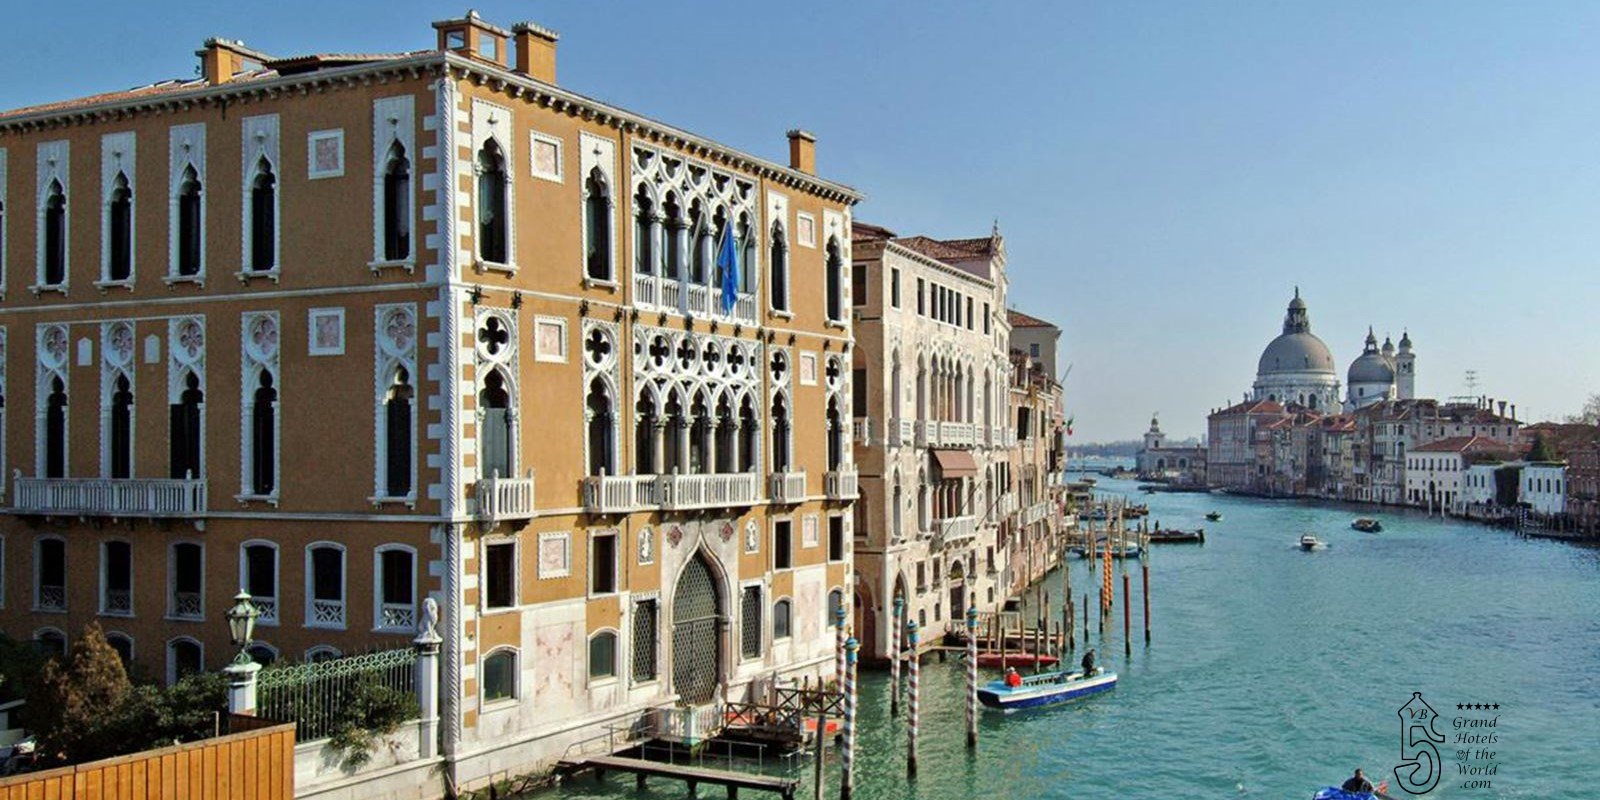 Gritti Palace in Venice